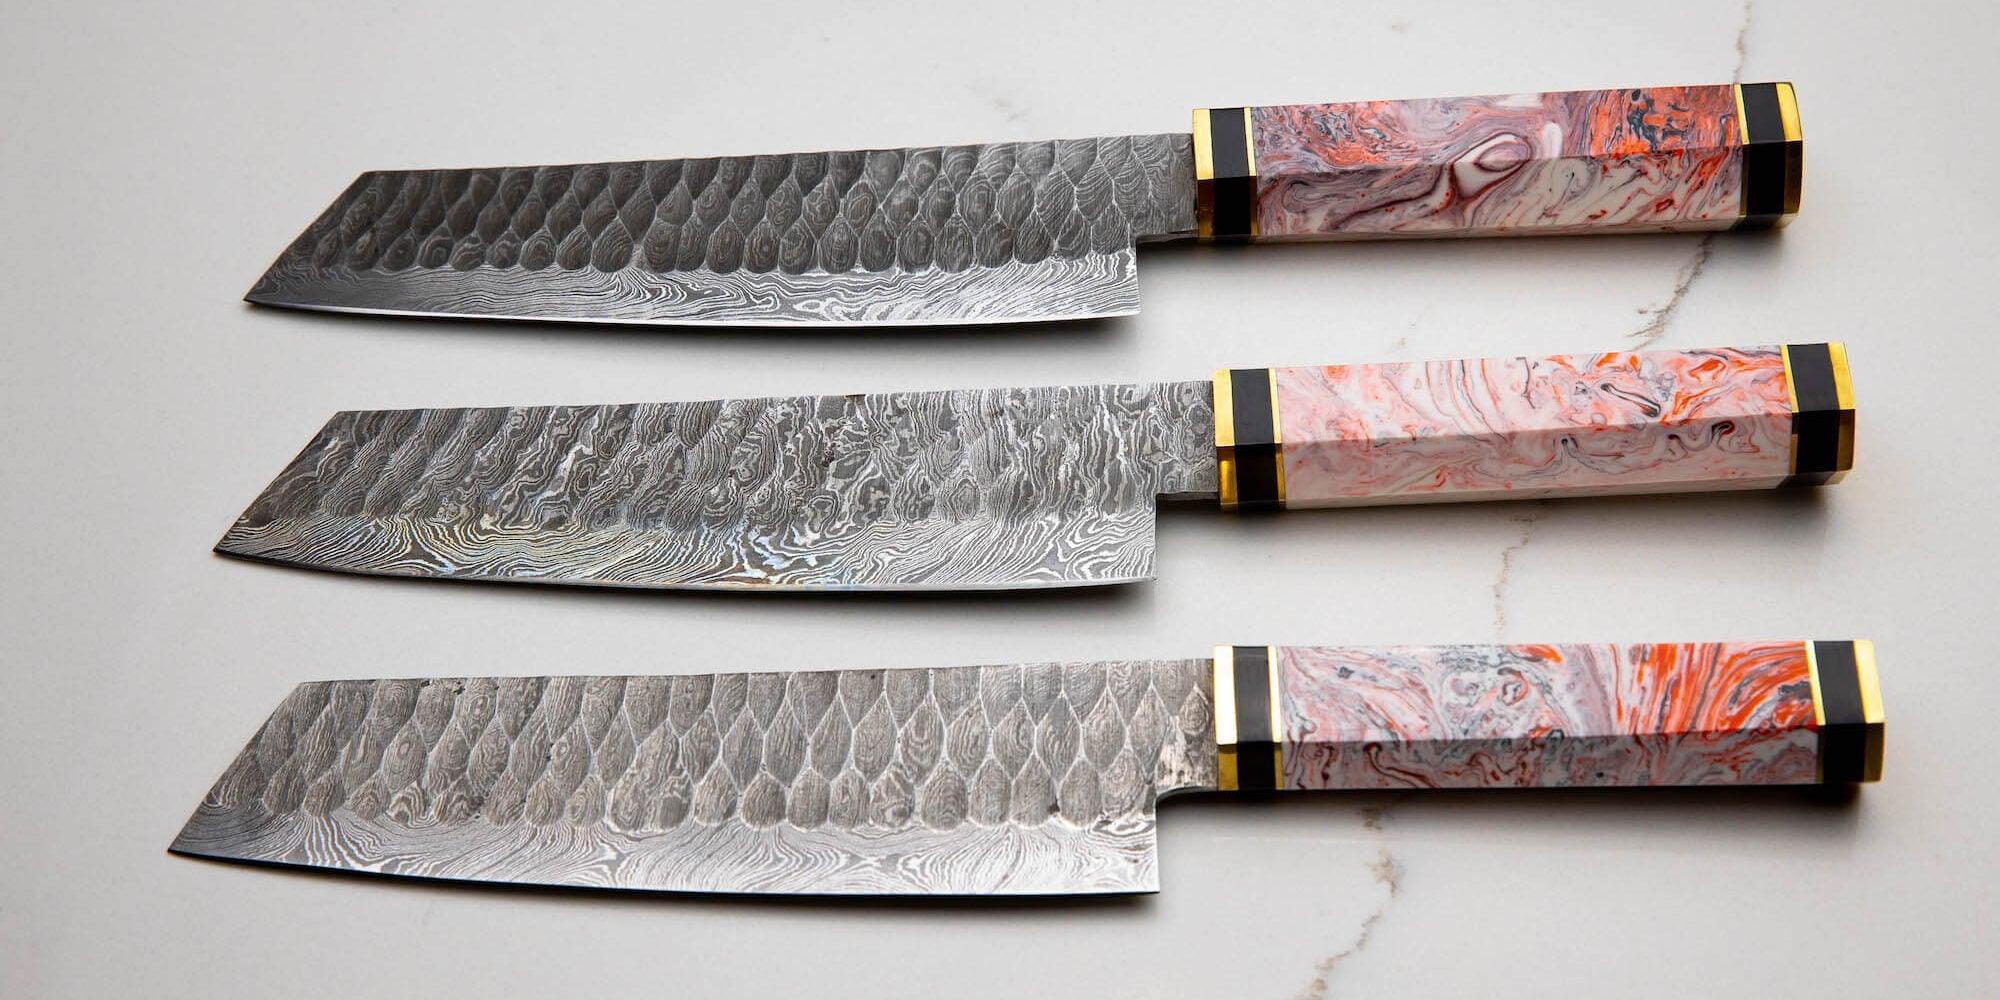 Damascus Kitchen Knives - Cuso Cuts